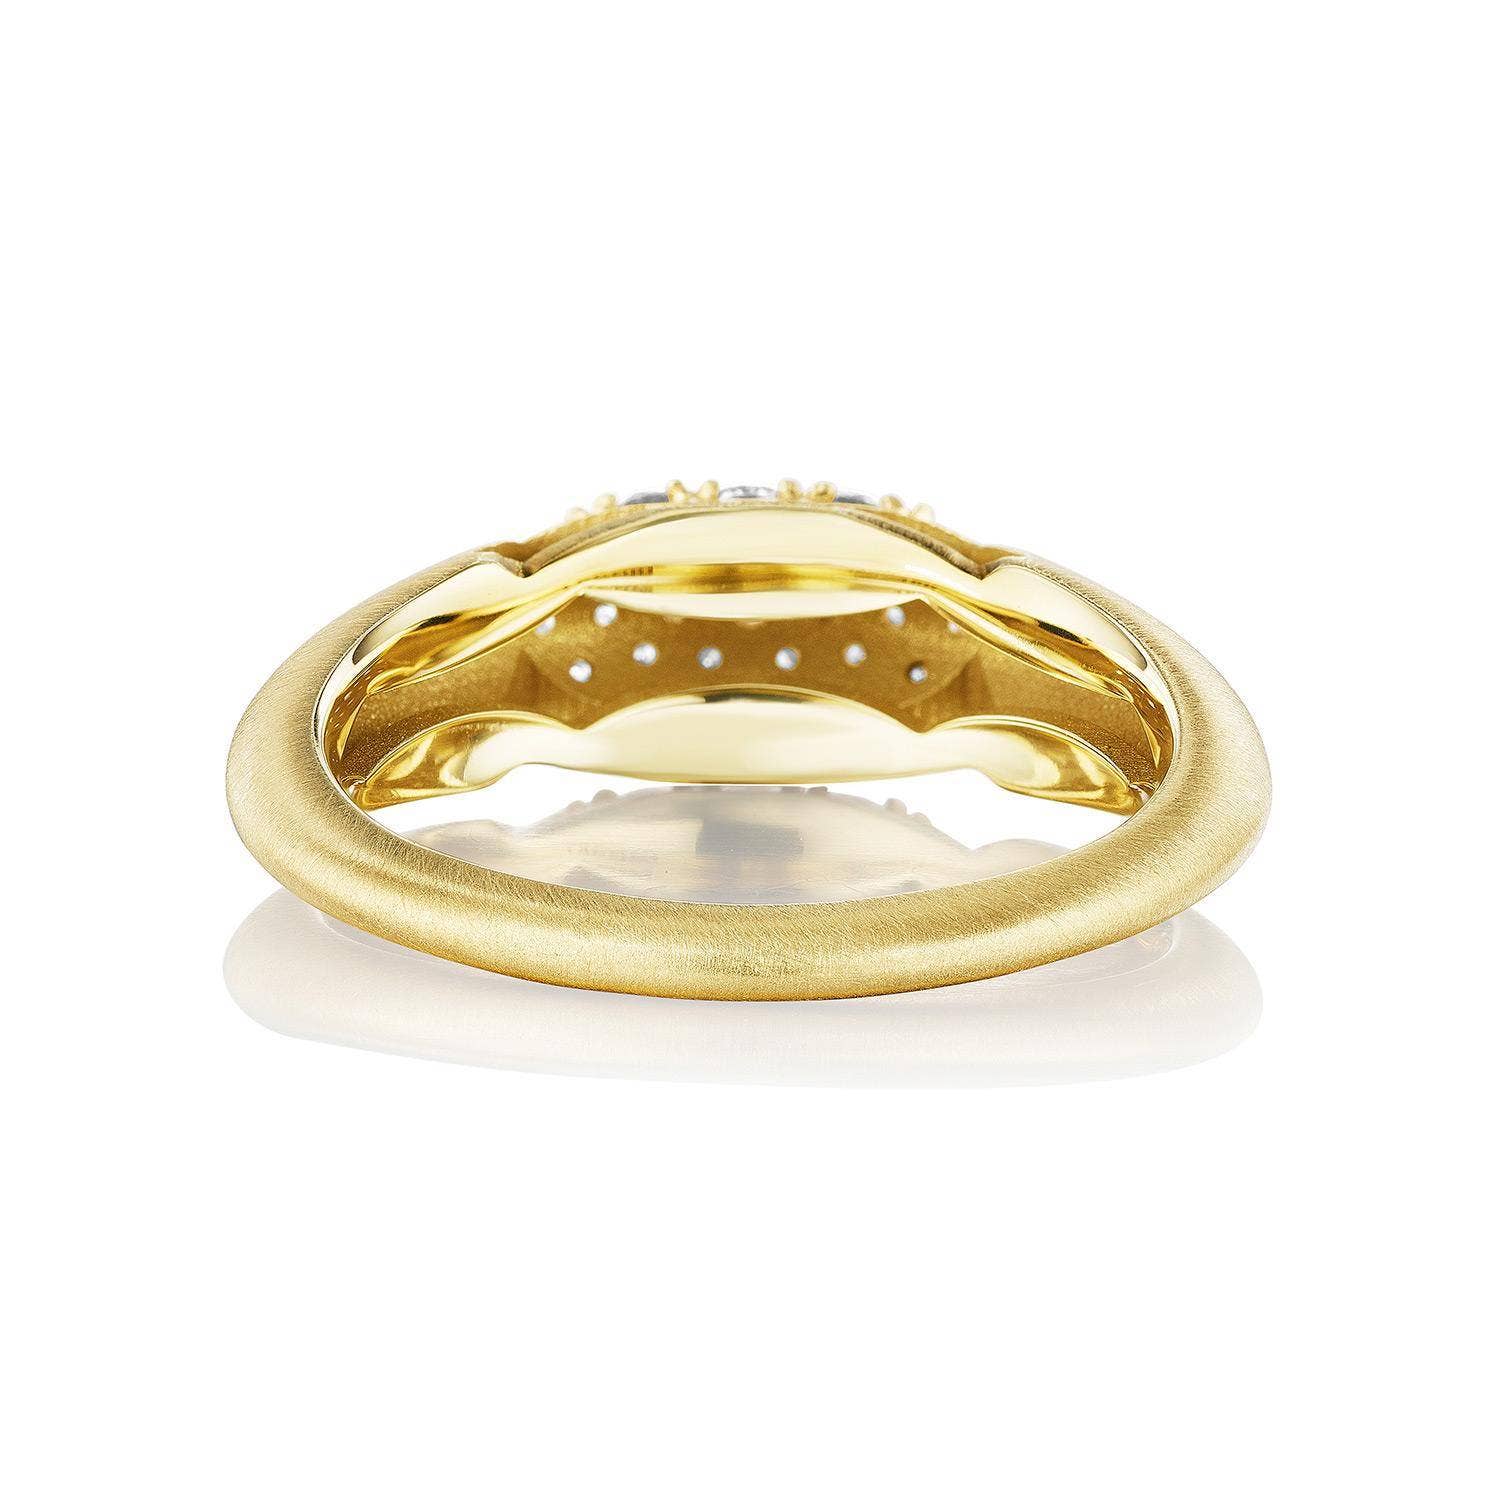 TACORI Allure Jewelry Ring - FR841SY